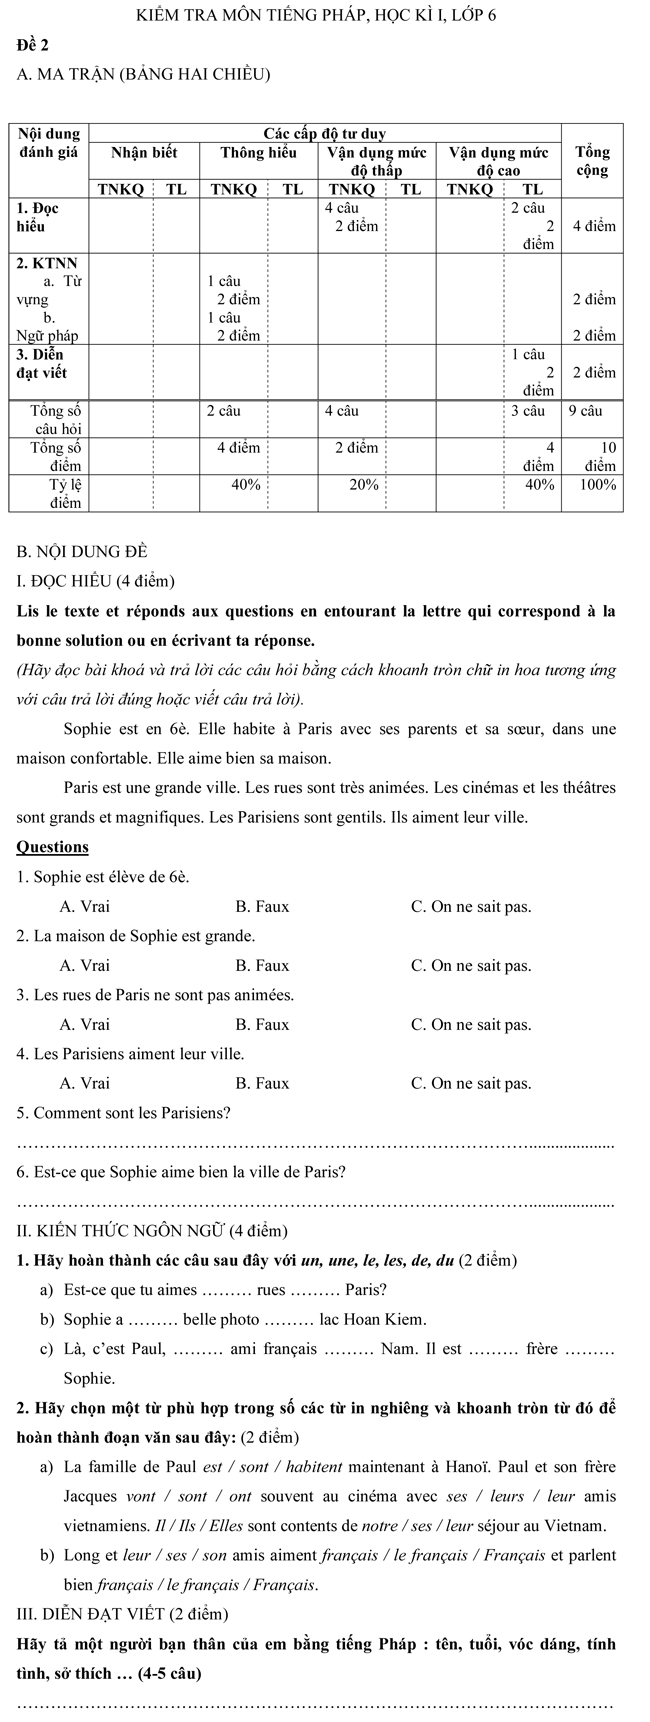 Đề kiểm tra học kì I lớp 6 môn tiếng Pháp – Đề số 2 Đề kiểm tra tiếng Pháp